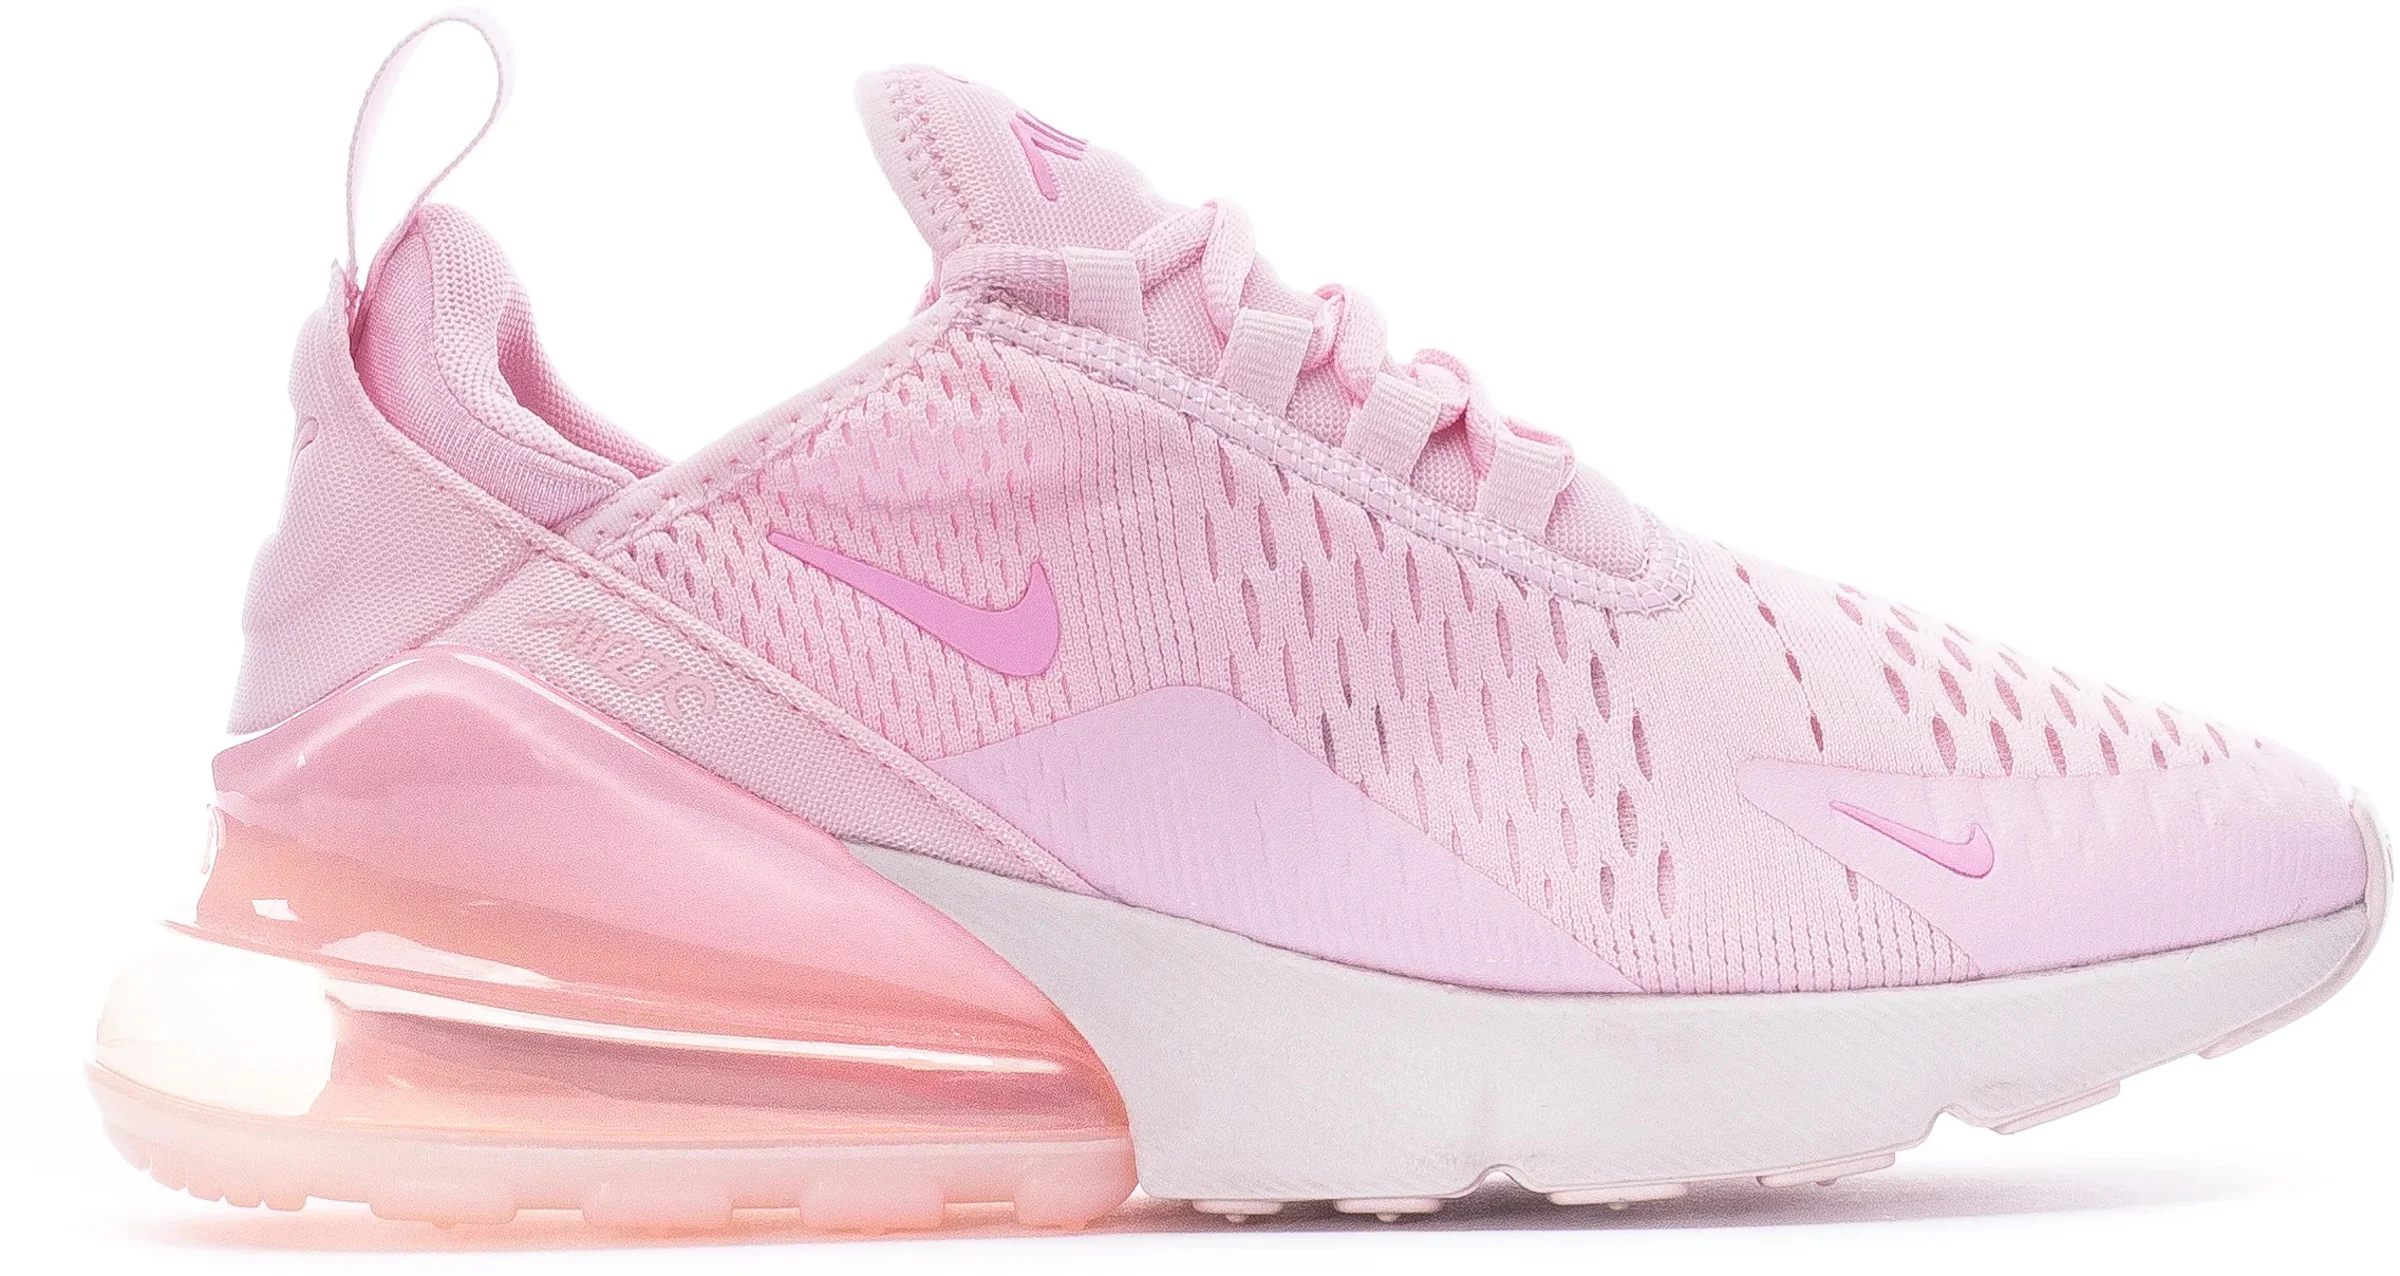 Nike Women's AIR MAX AH6789-604 270 Light Soft Pink/Pink